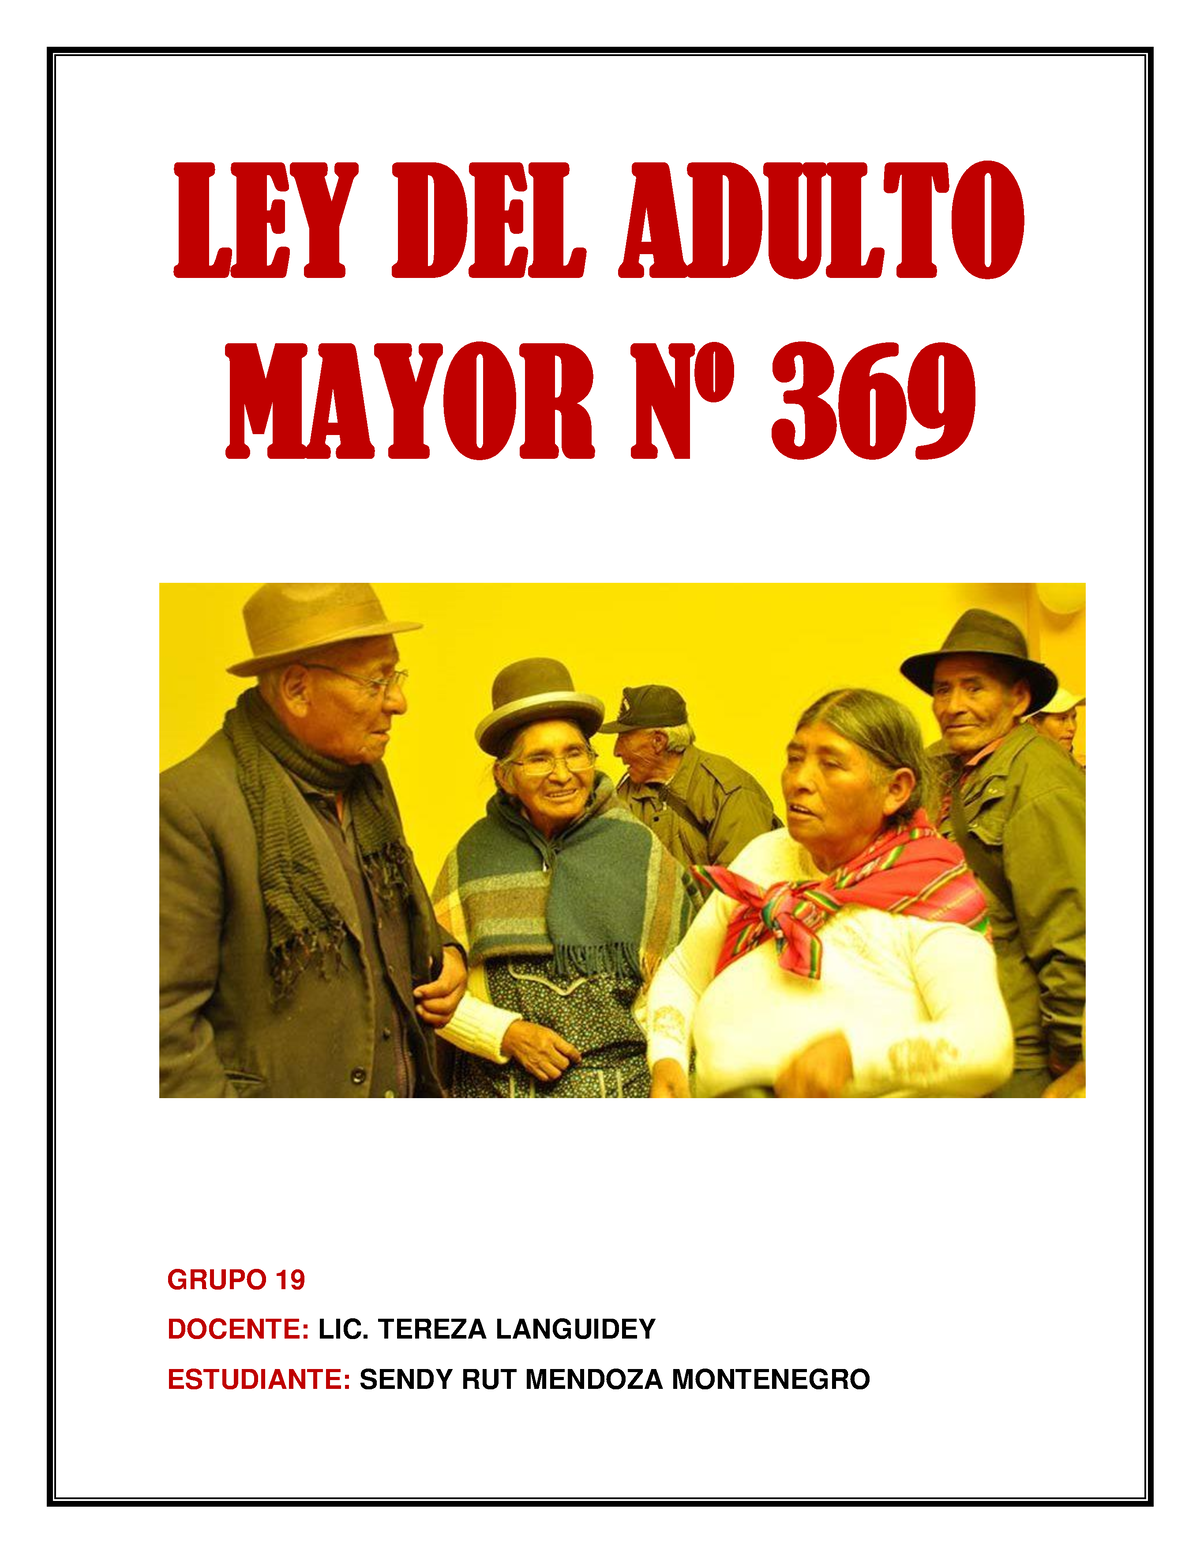 Doc 20230424 Wa0069 Resumen Del Adulto Mayor Ley Del Adulto Mayor Nº 369 Grupo 19 Docente 0985